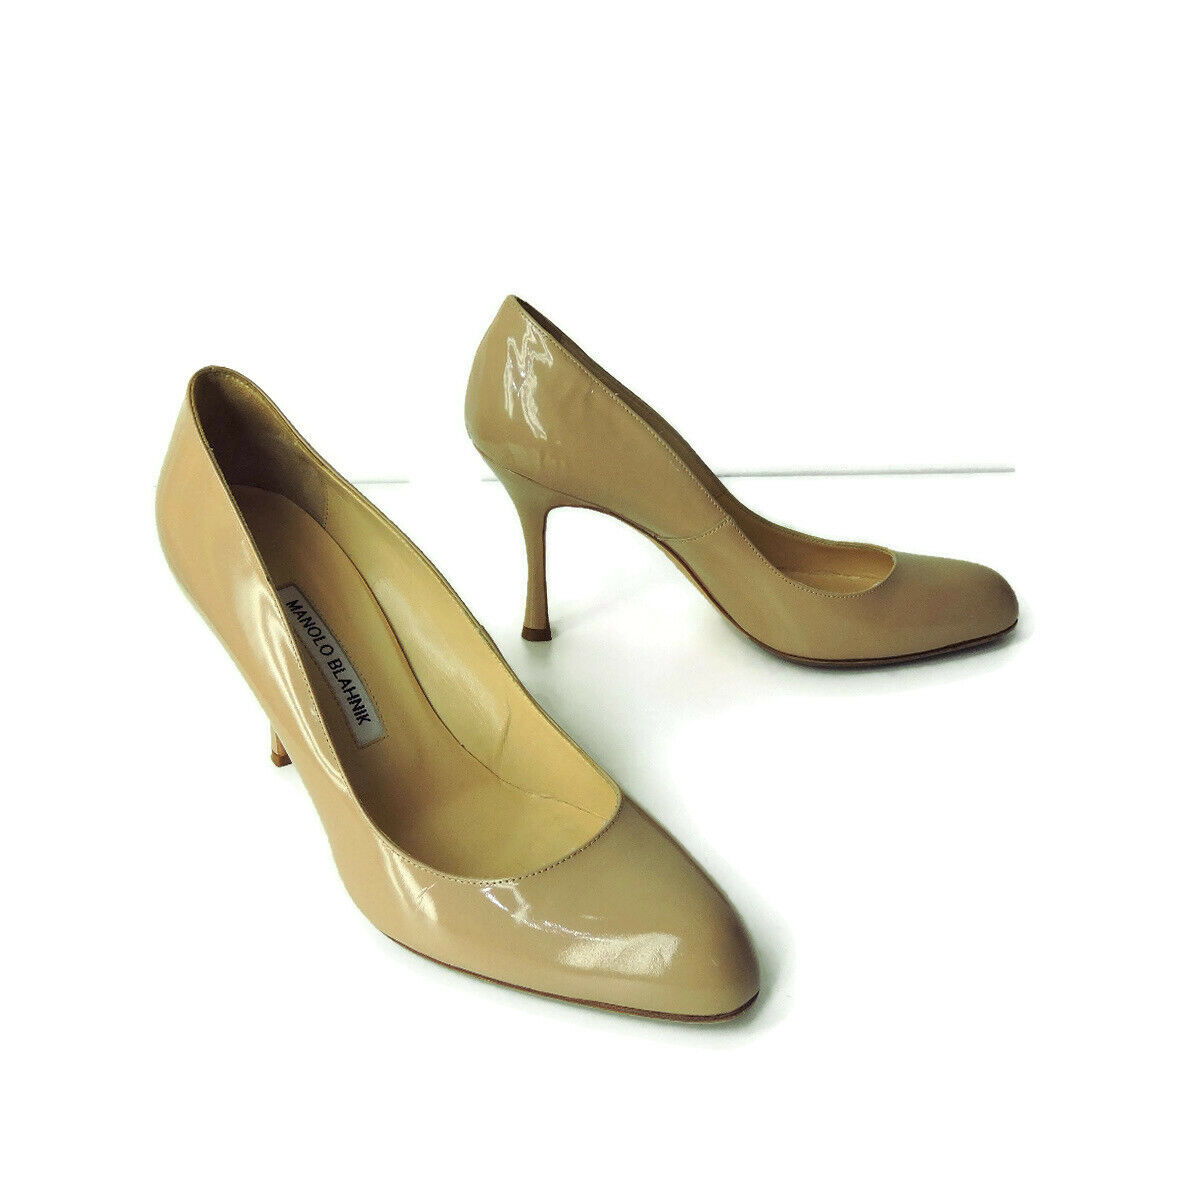 Manolo Blahnik Nude Patent Leather Almond Toe Pump Sz 38.5 / 8.5 US  Shoes